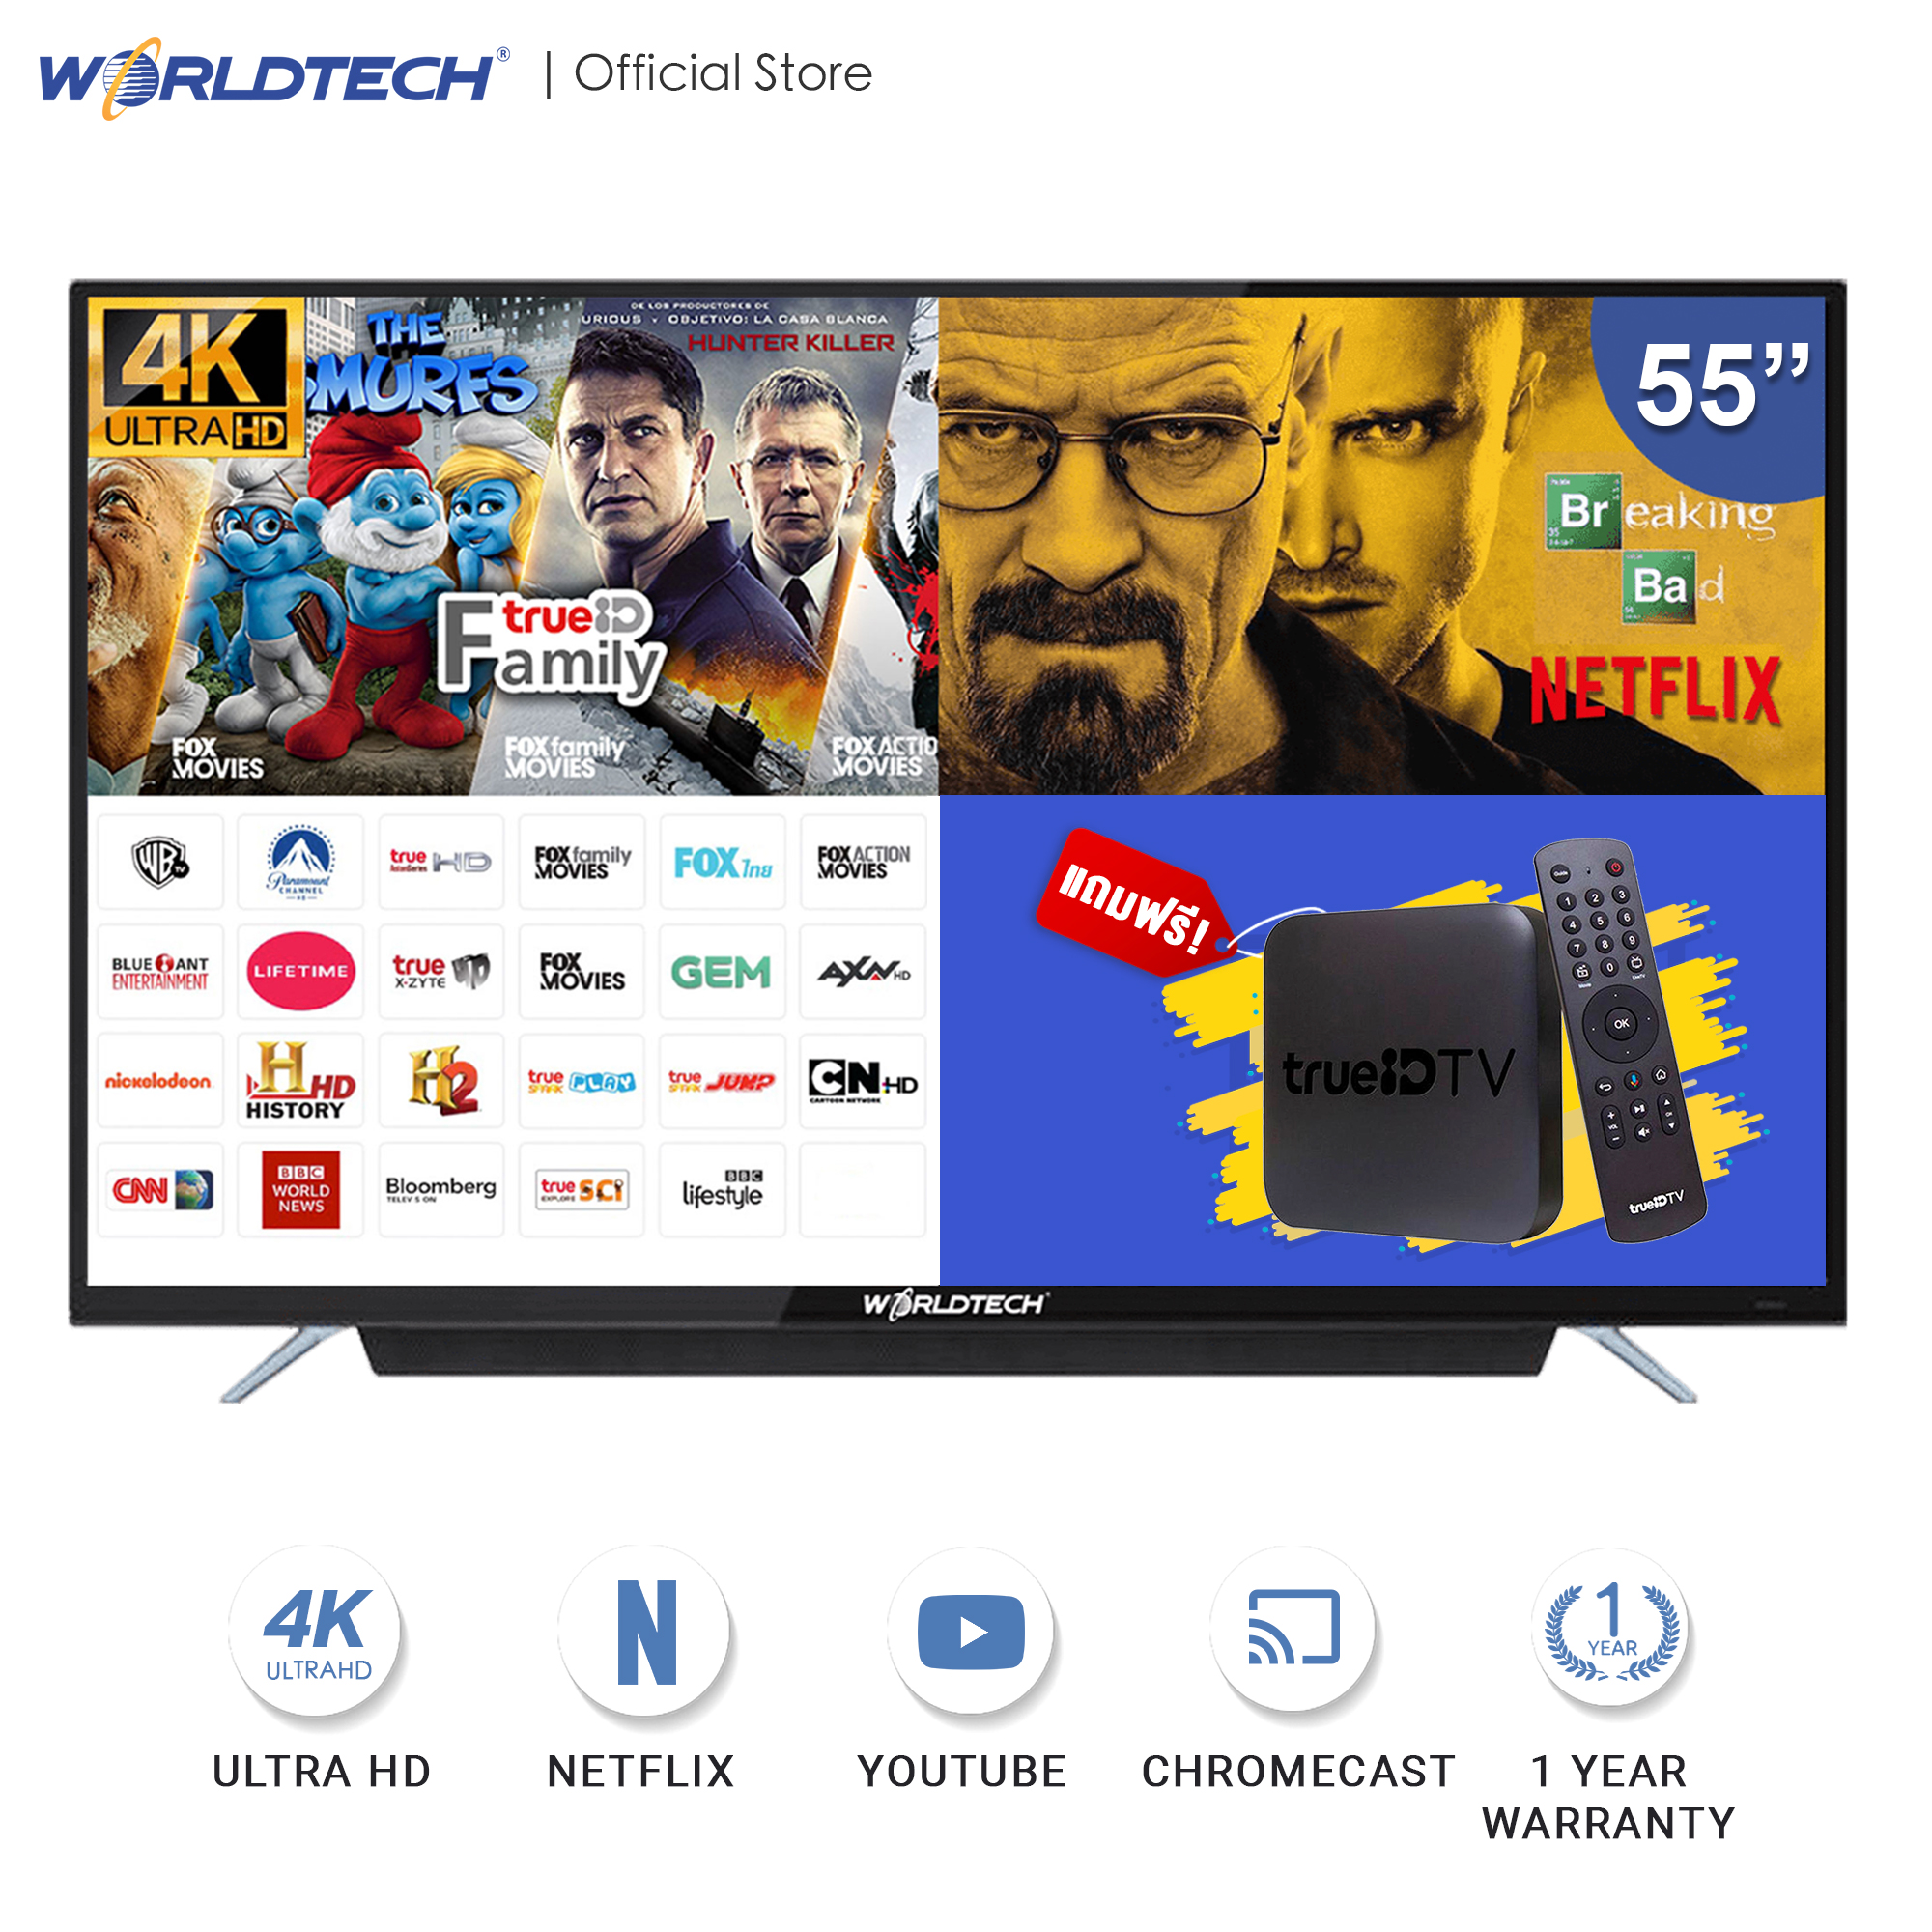 Worldtech Analog Smart TV 55 4K LED TV แถมฟรี True ID BOX มูลค่า 1,490 บาท กล่องซื้อขาดไม่มีรายเดือน YouTube/Internet